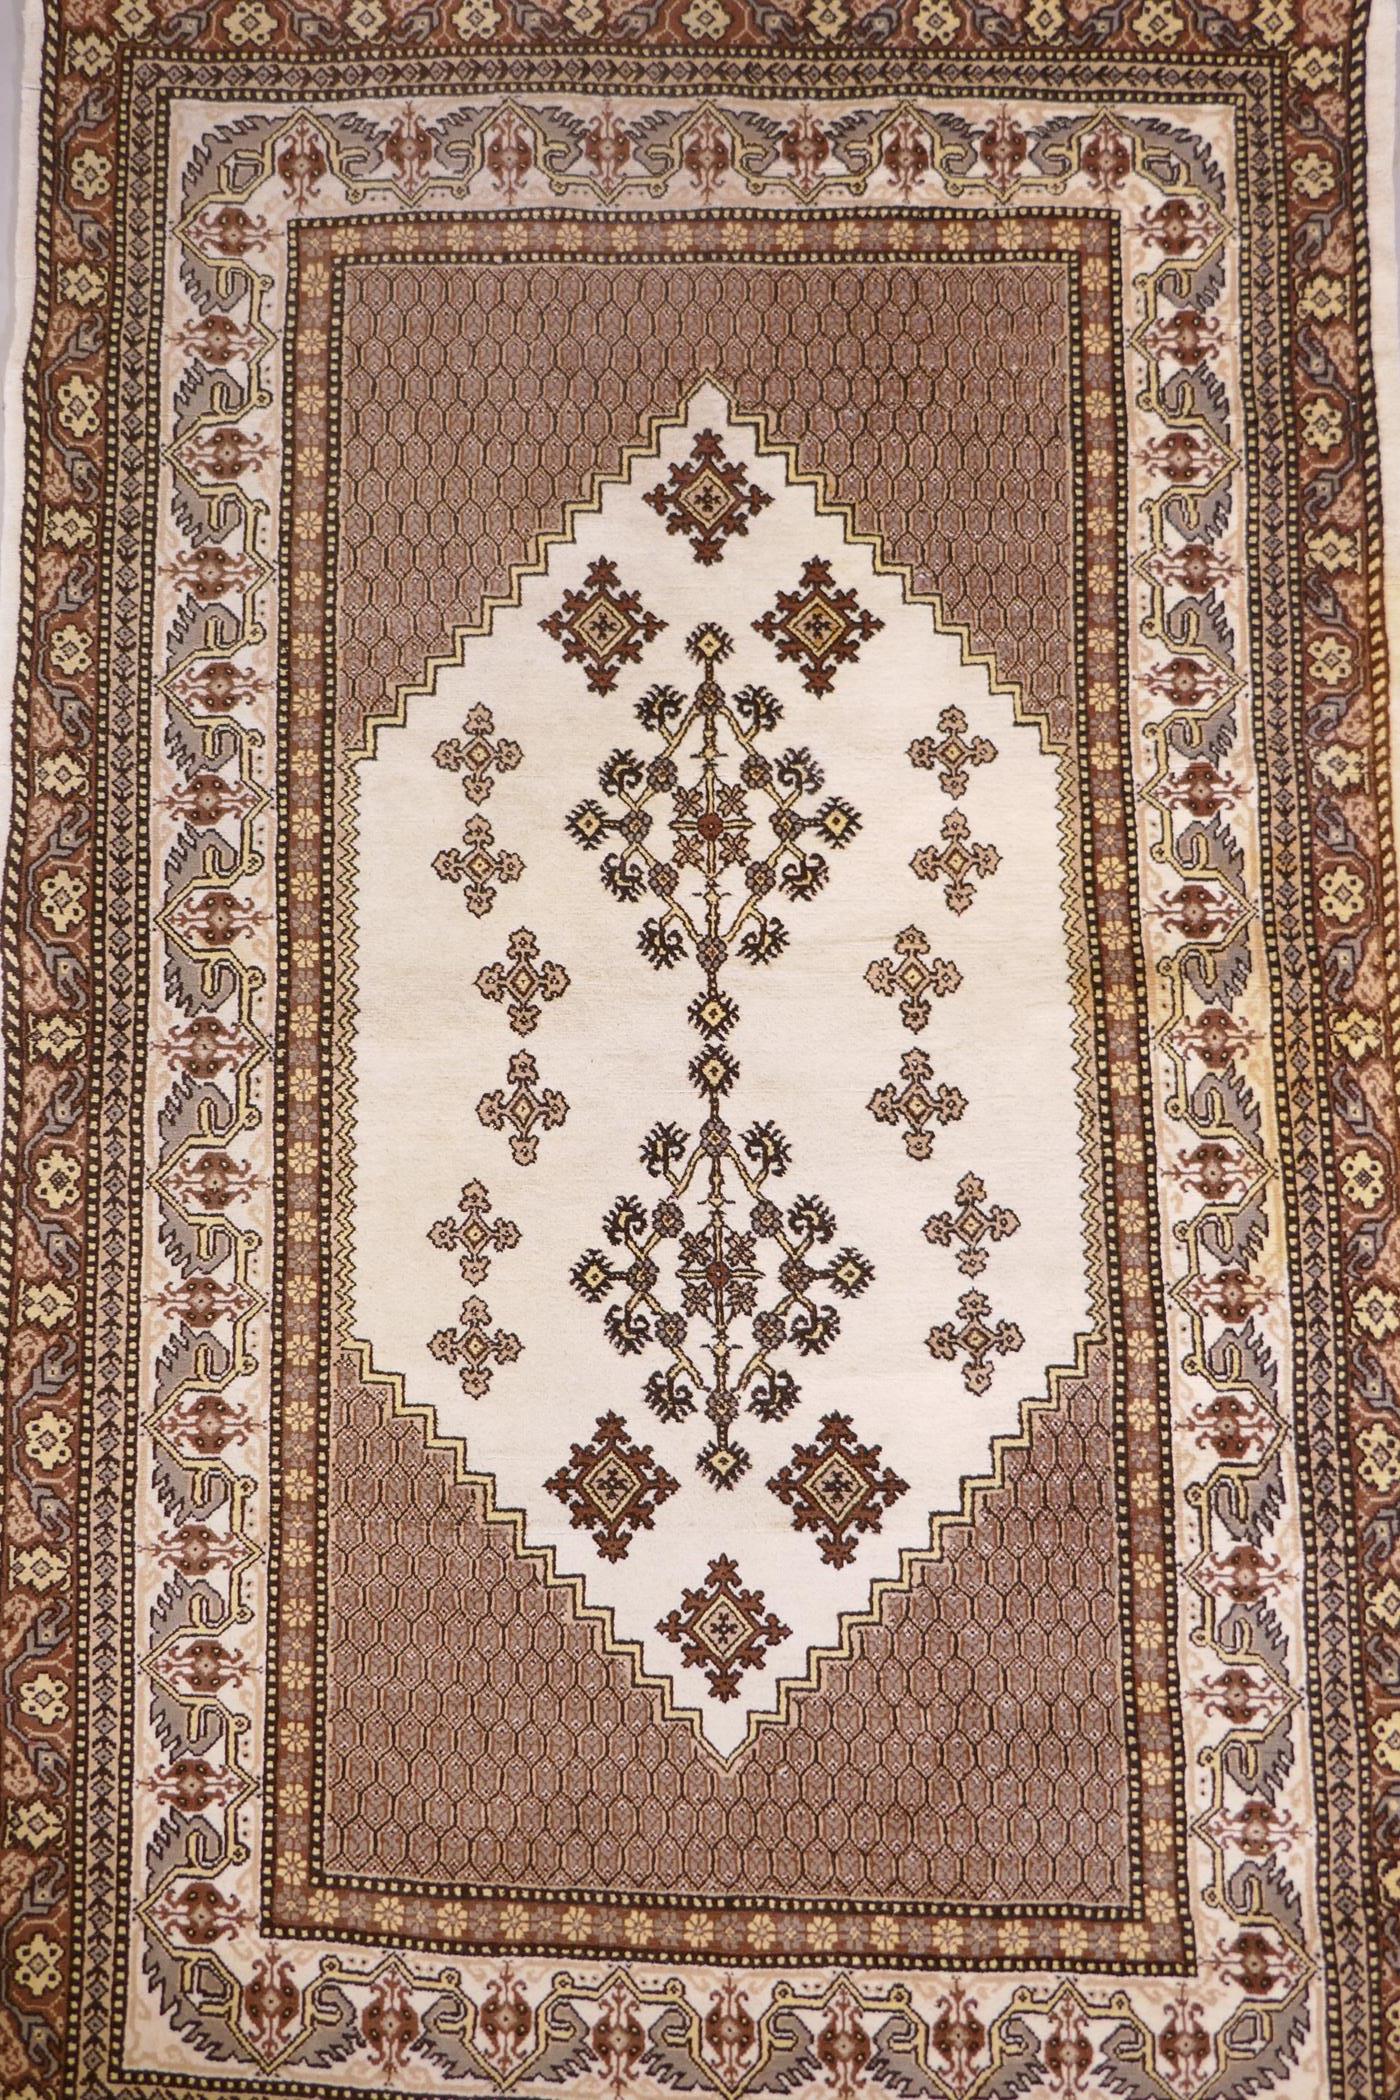 A Tunisian cream ground geometric rug with brown borders, 118cm x 190cm - Image 2 of 6